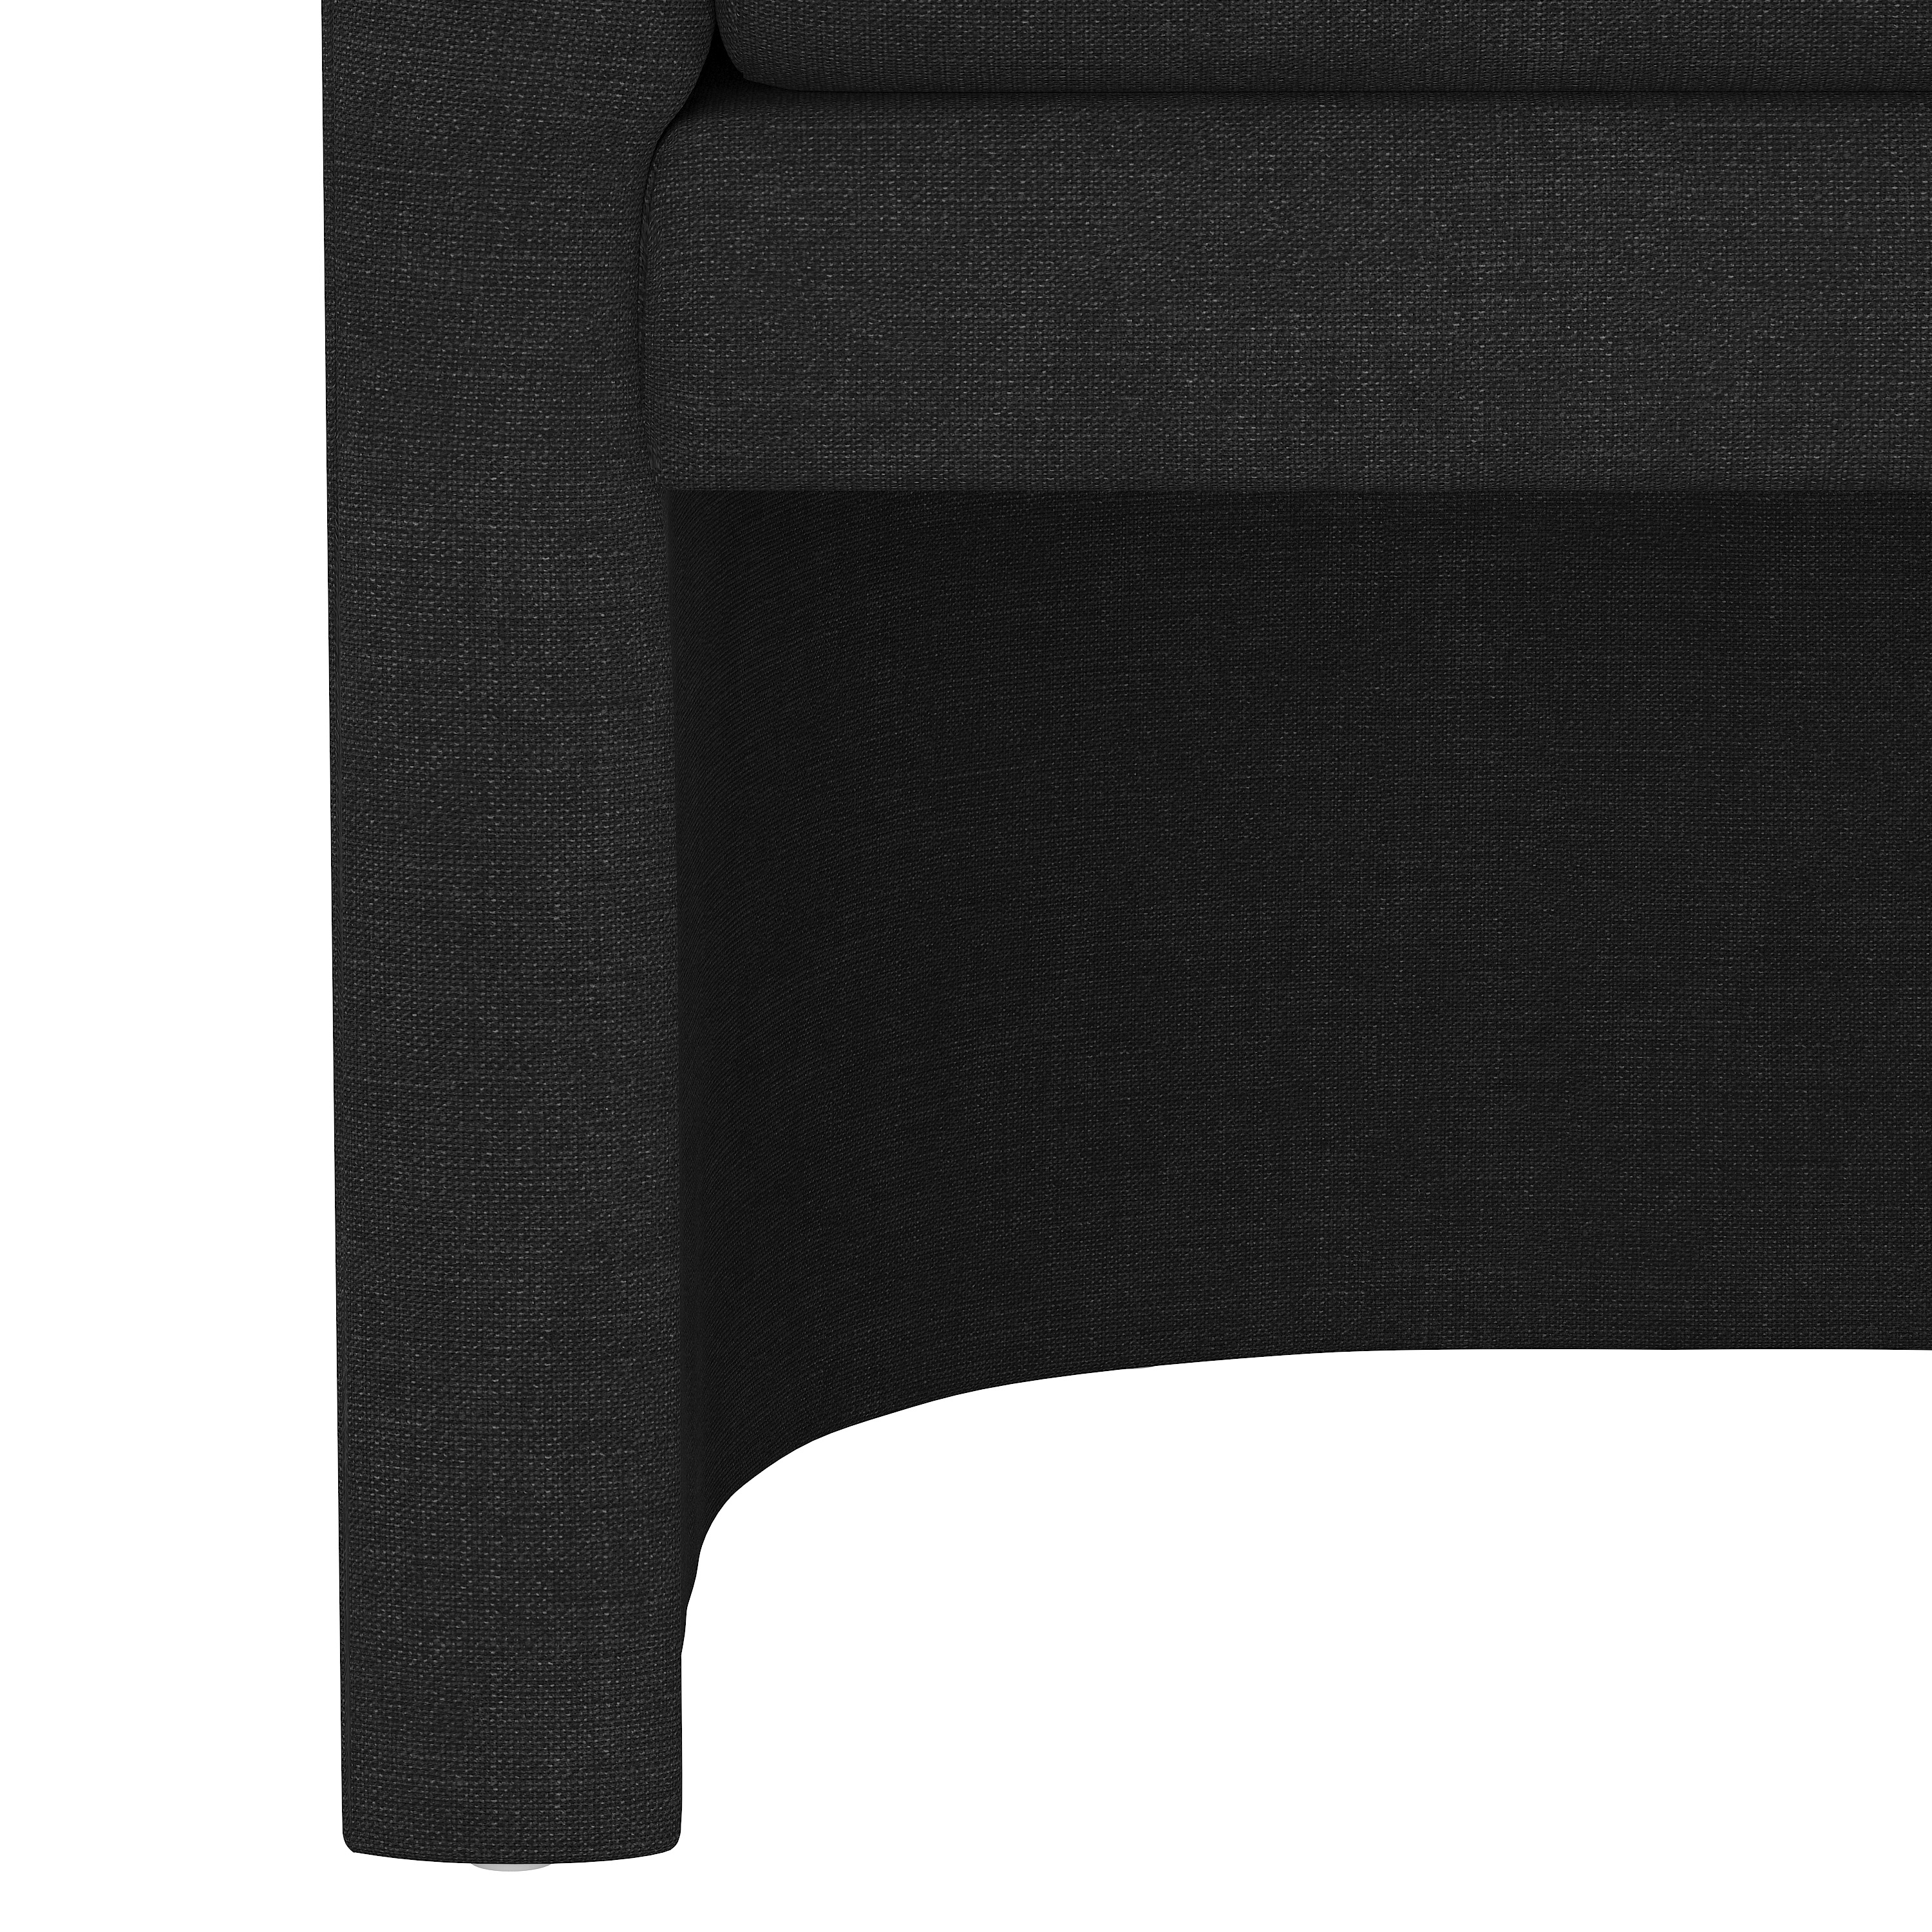 Wellshire Chair, Caviar Linen - Image 4